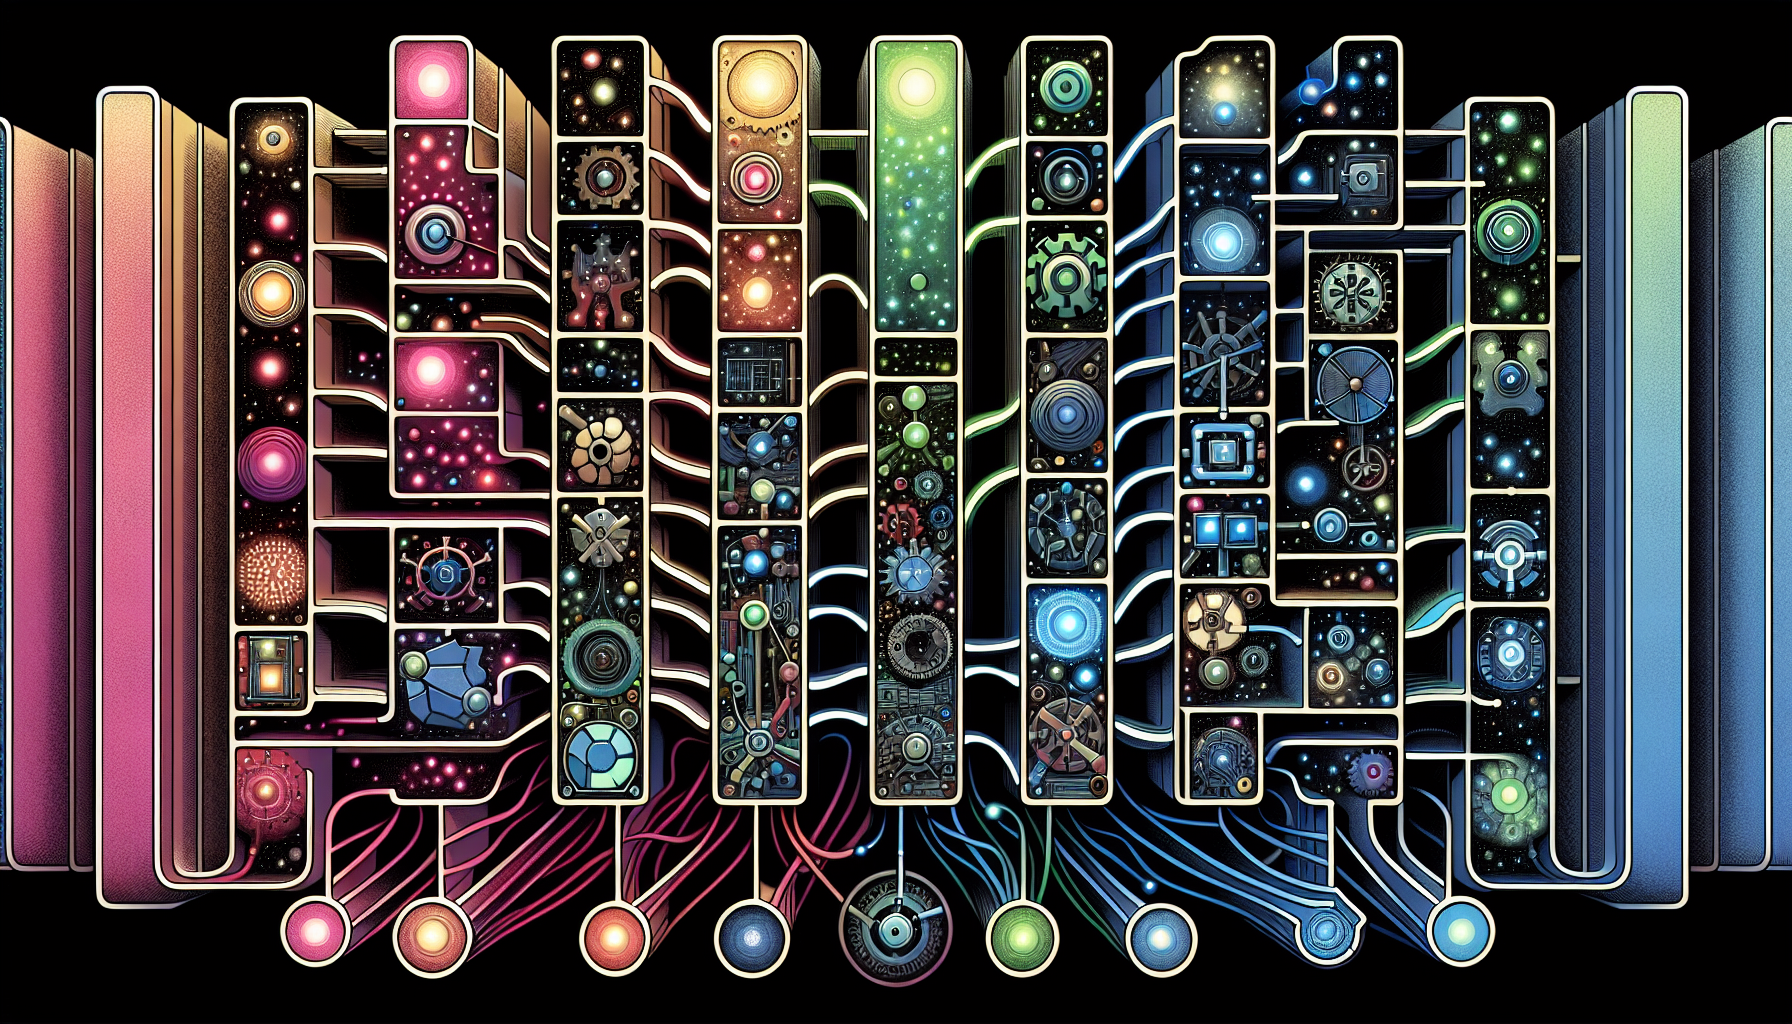 Illustration of a complex nineslot system